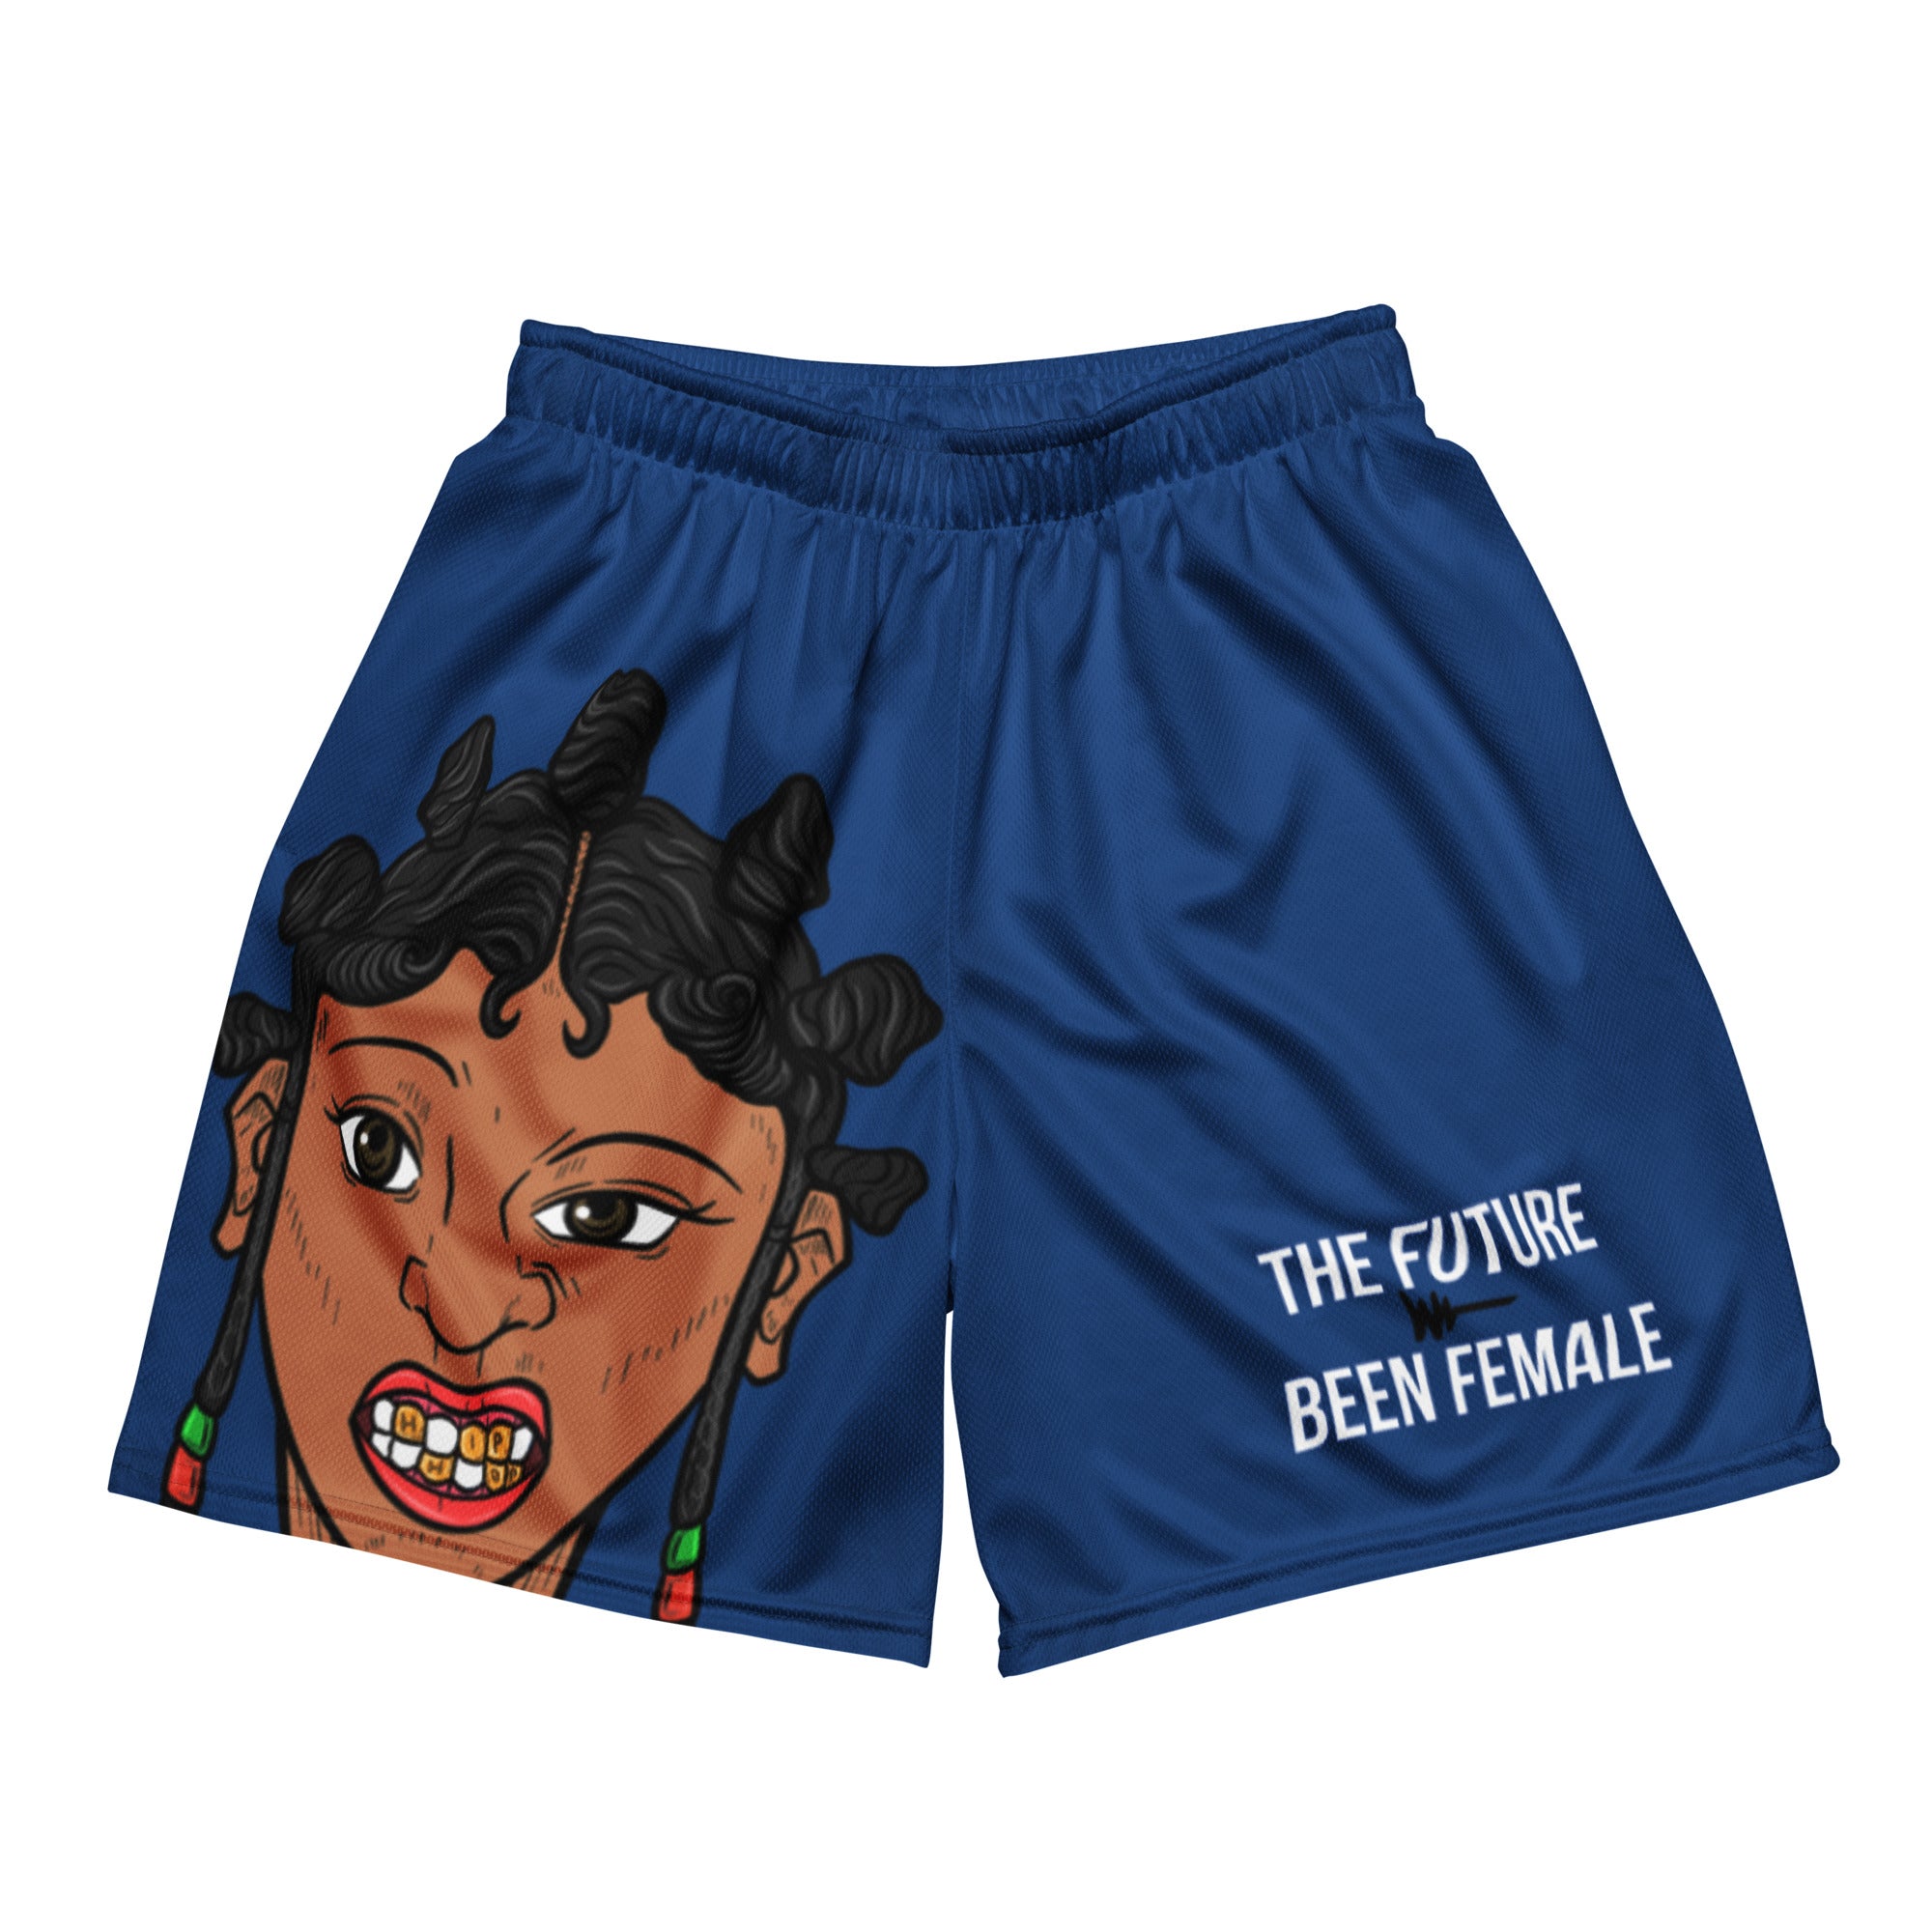 fbf hip hop shorts